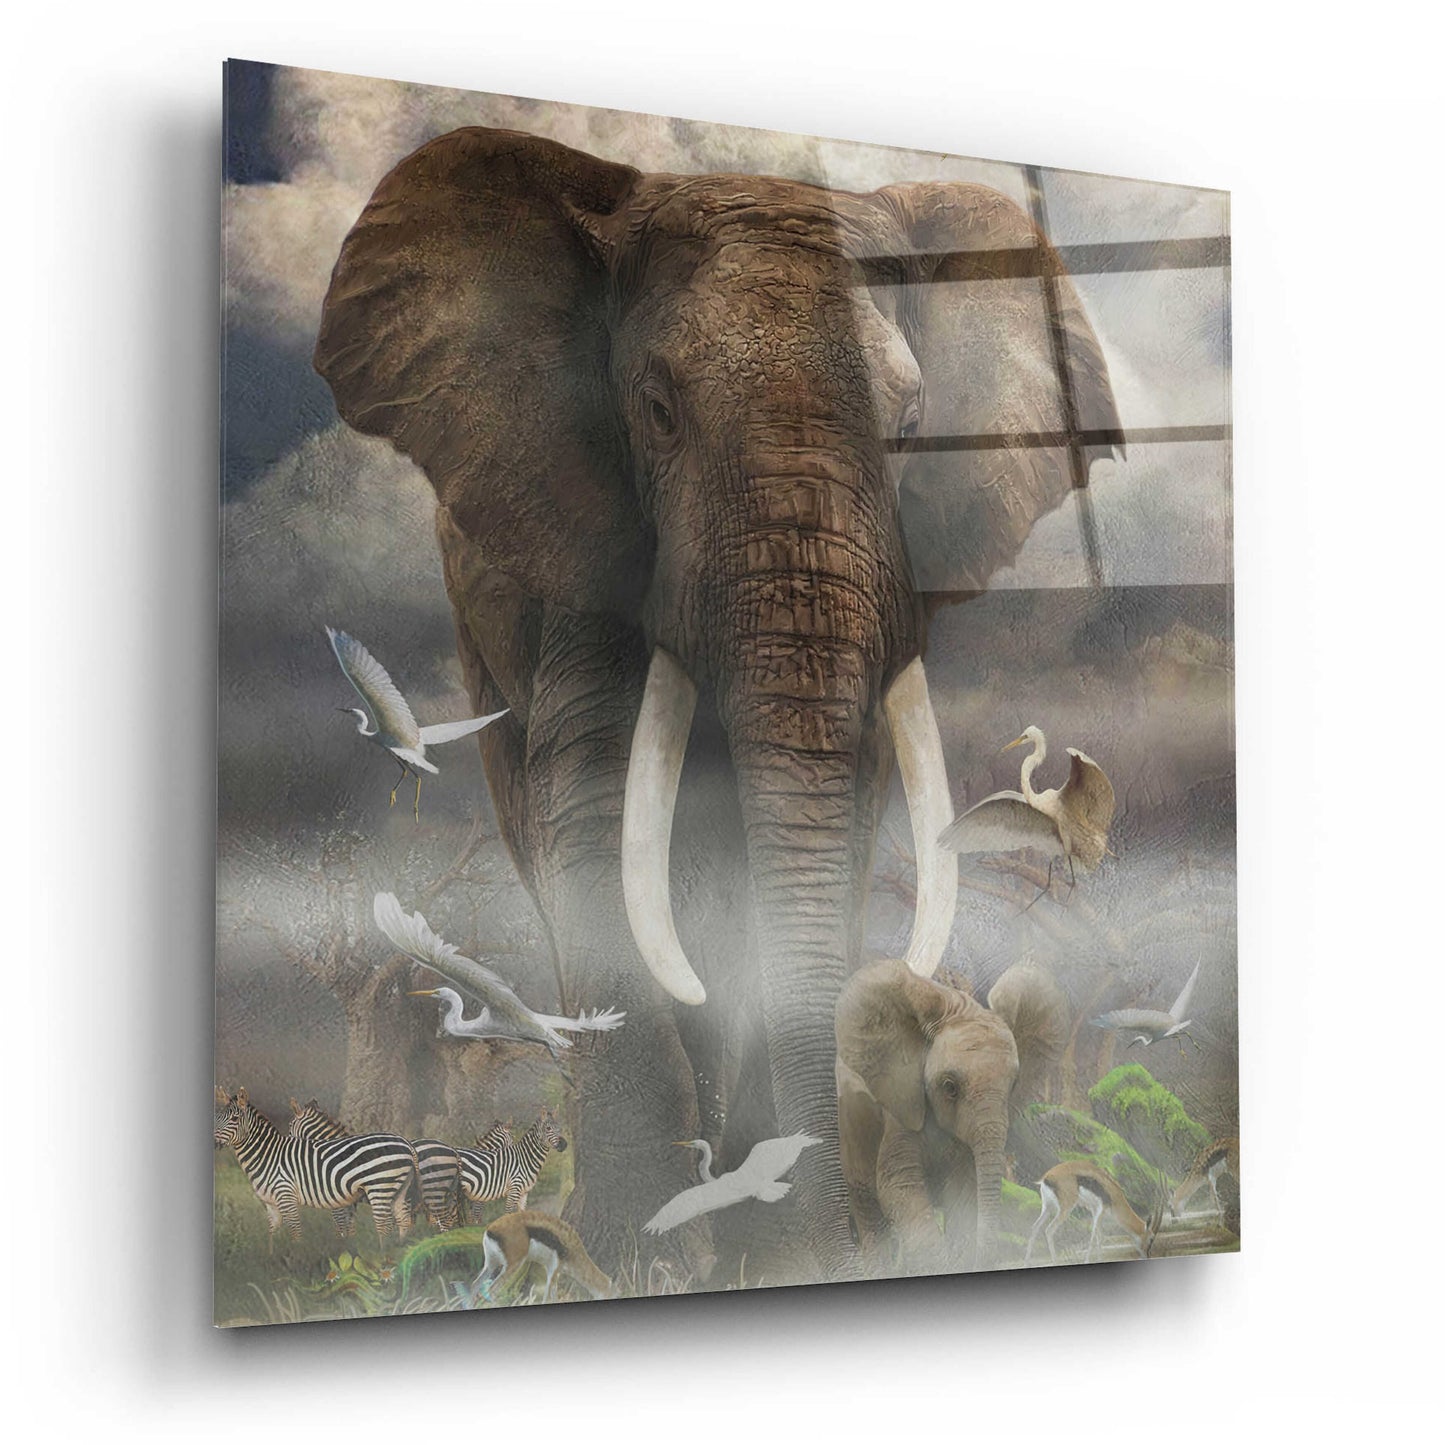 Epic Art 'Mighty Elephant' by Enright, Acrylic Glass Wall Art,12x12